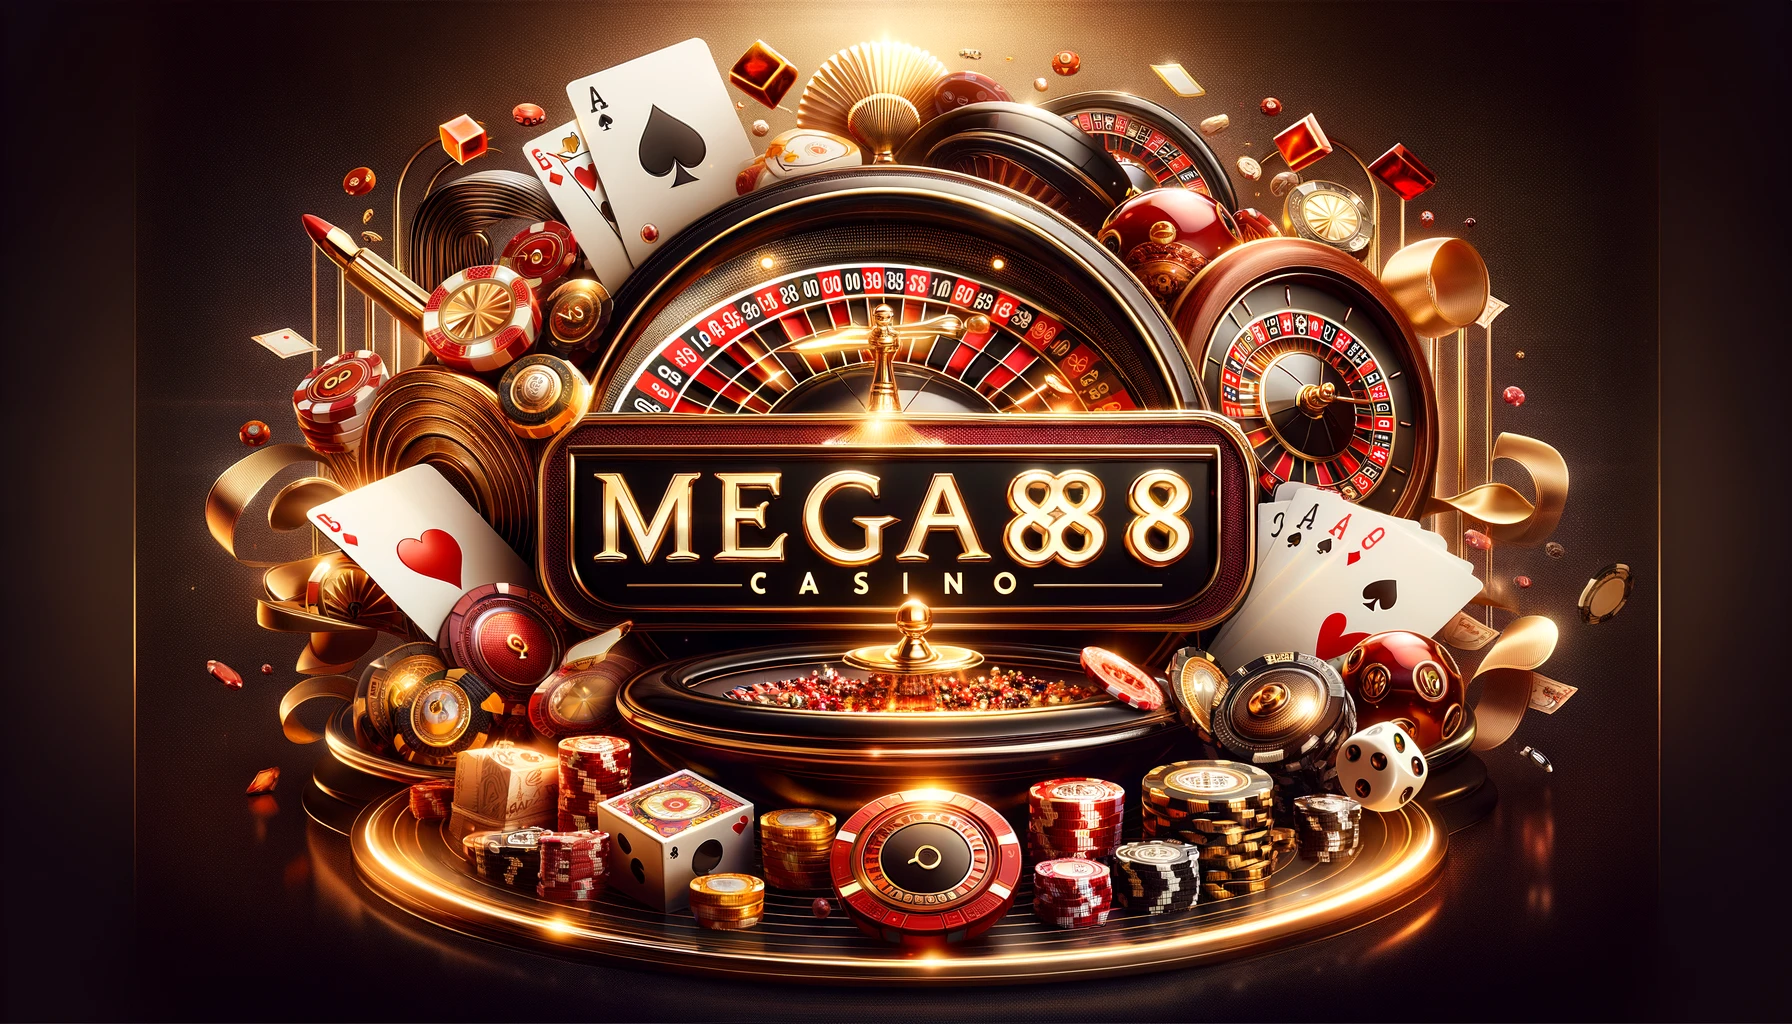 Mega888 Casino: A Premier Online Gaming Destination